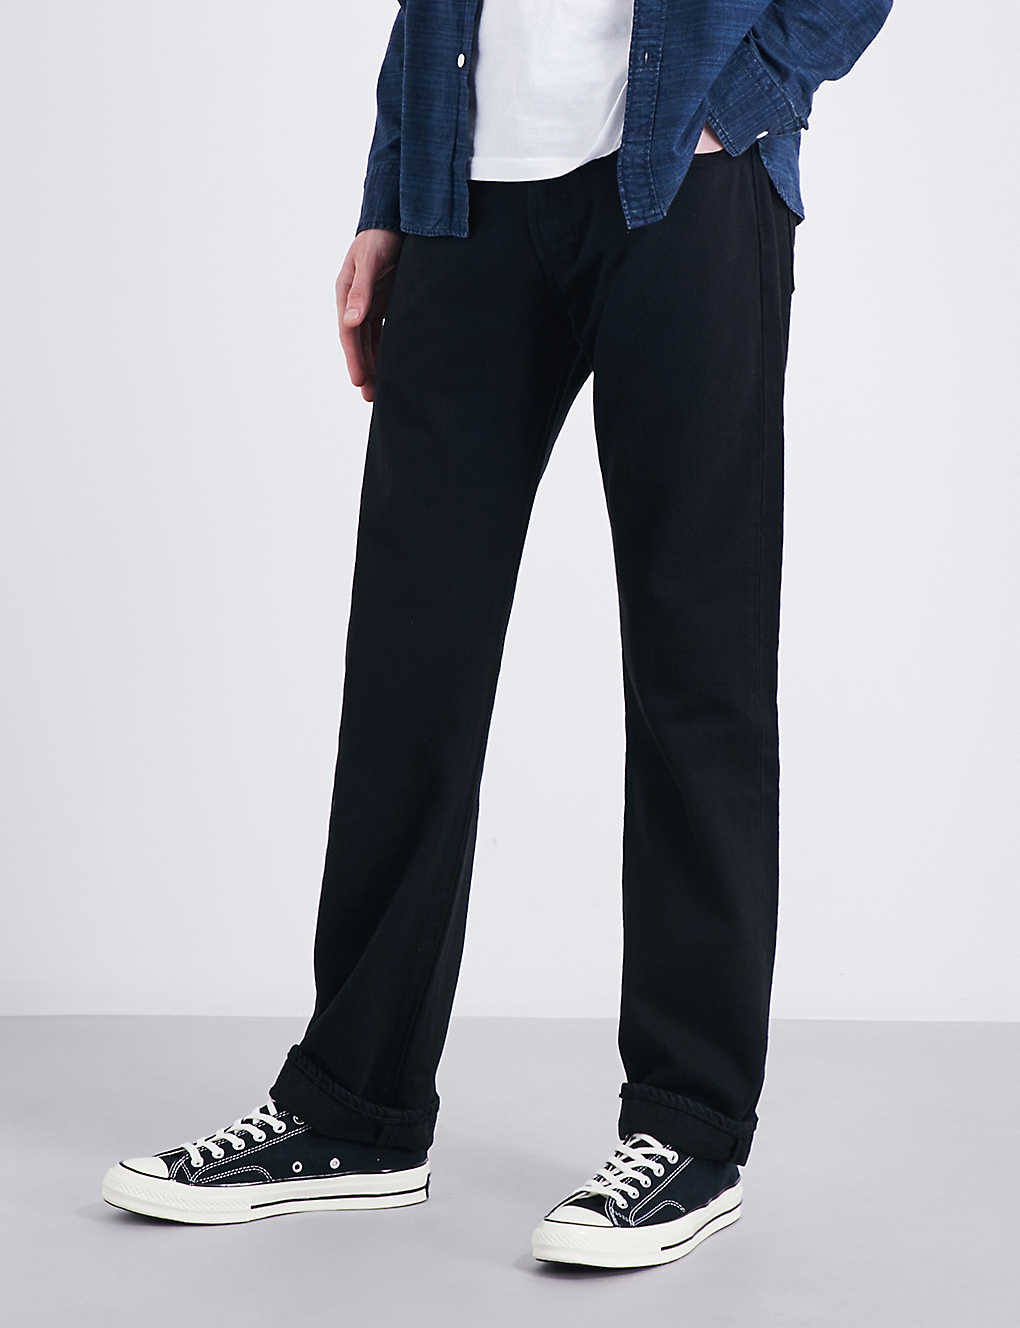 LEVI'S - 501 Original regular-fit straight jeans | Selfridges.com